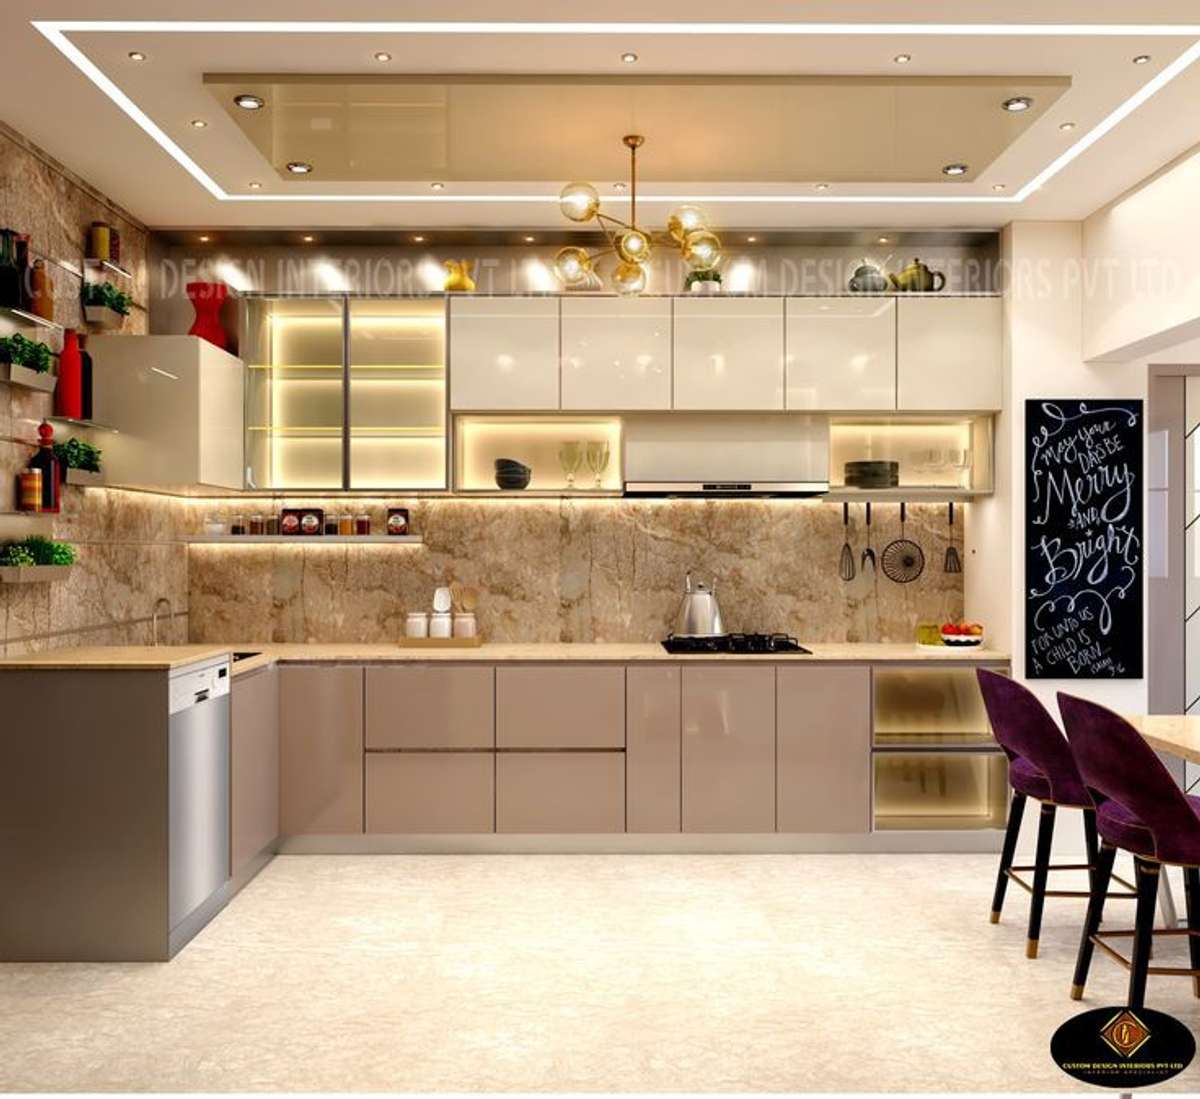 #Jaipurcarpenter #carpenter  #modularkitchendesign #lshapekitchendesign #aluminiumprofilelight #aluminiumprofilelightkitchendesign #acrylicseatkitchendesign #interiordesign #builder #kitchen #beautifulkitchendesig#inotech kitchen #PVC sheet #ClosedKitchen #LargeKitchen #LShapeKitchen #KitchenCabinet #WoodenKitchen #KitchenRenovation